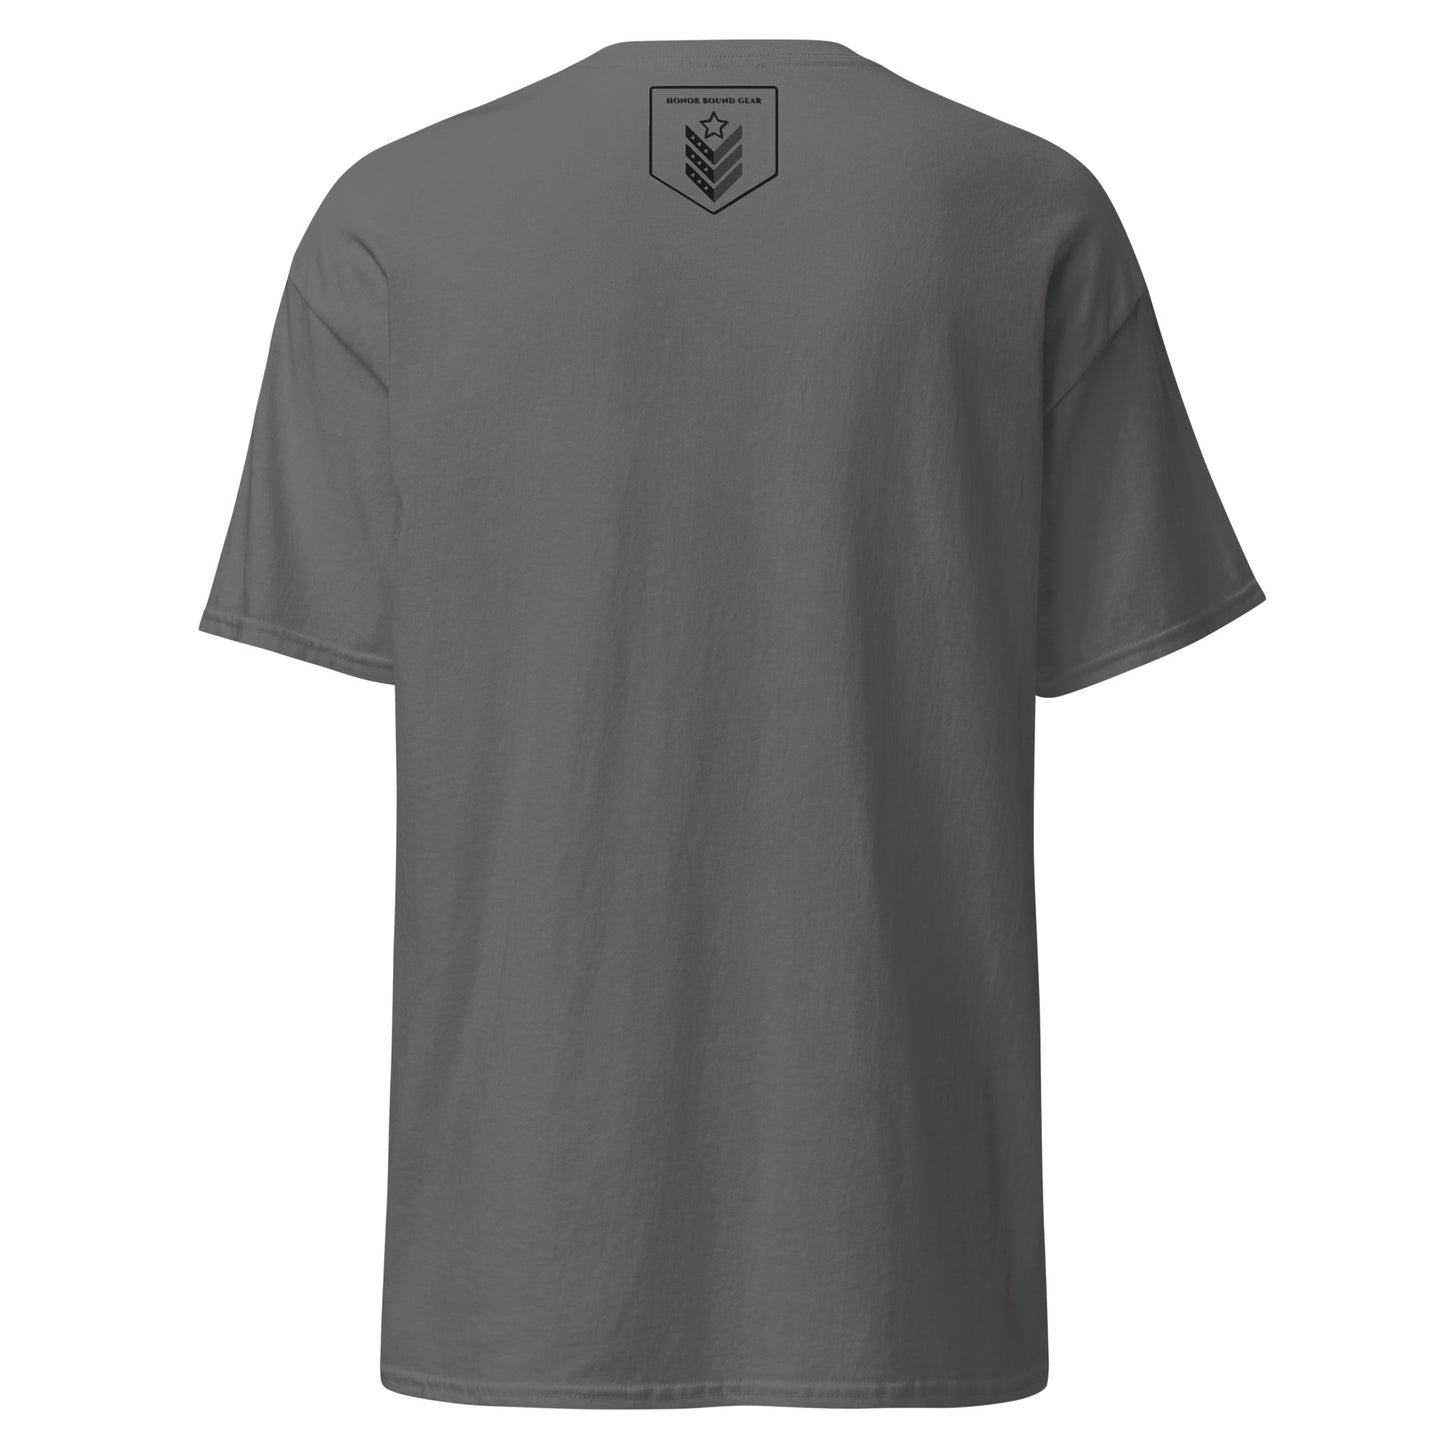 HBG "Inverted" Men's T-Shirt